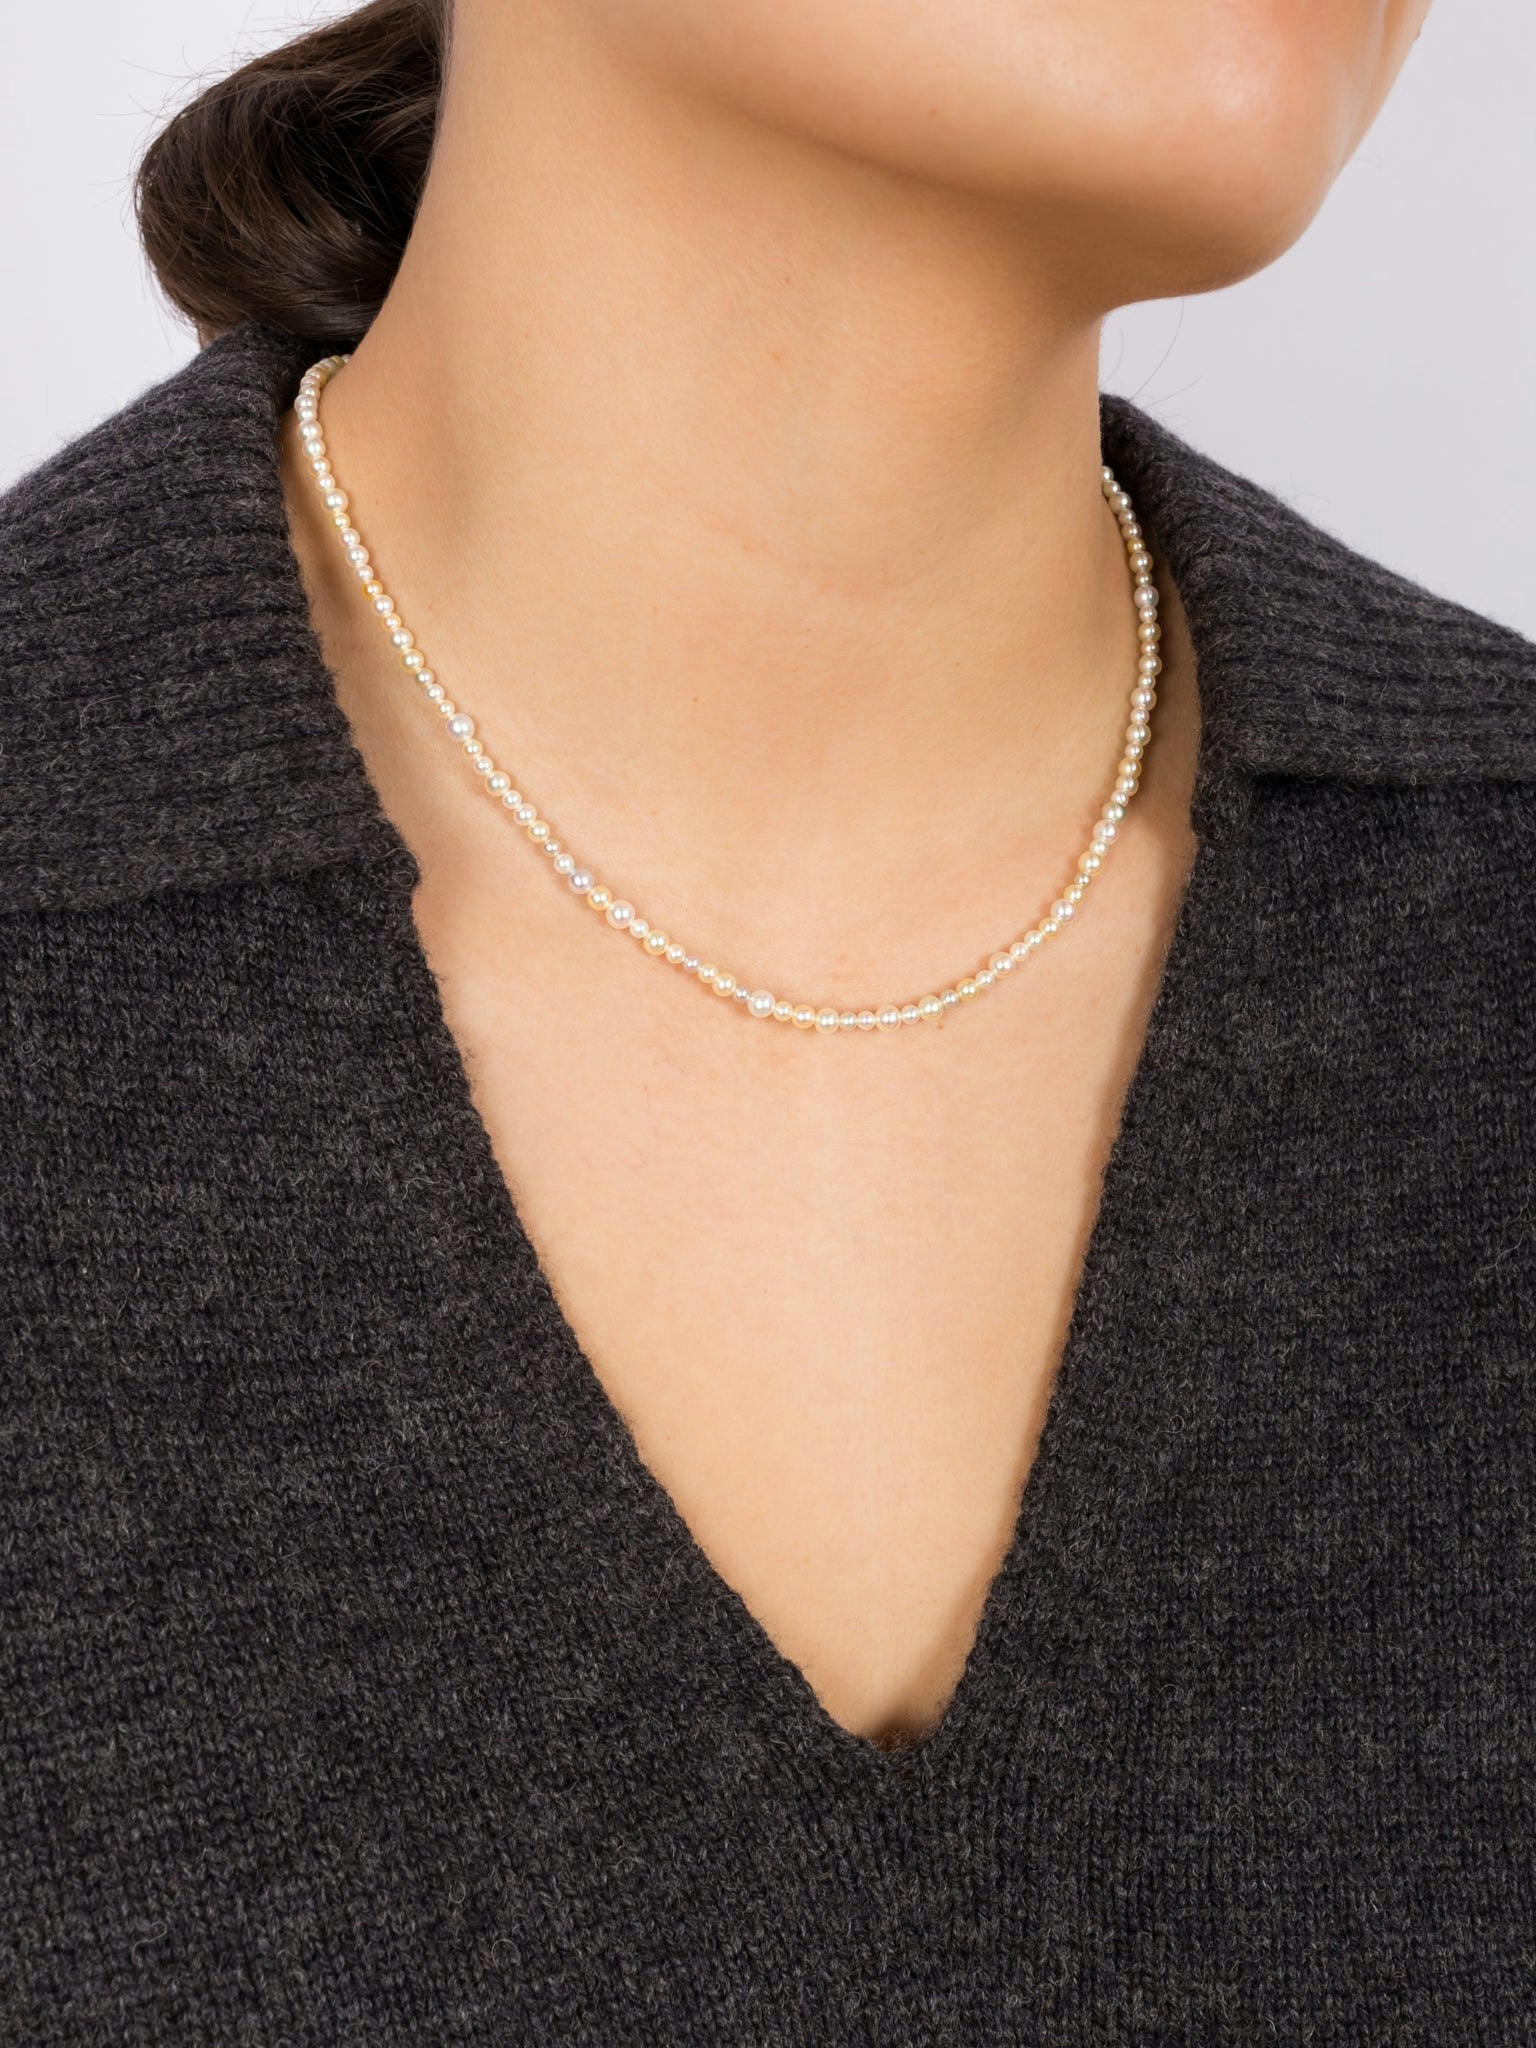 Akoya pearl necklace with diamond clasp photo 2